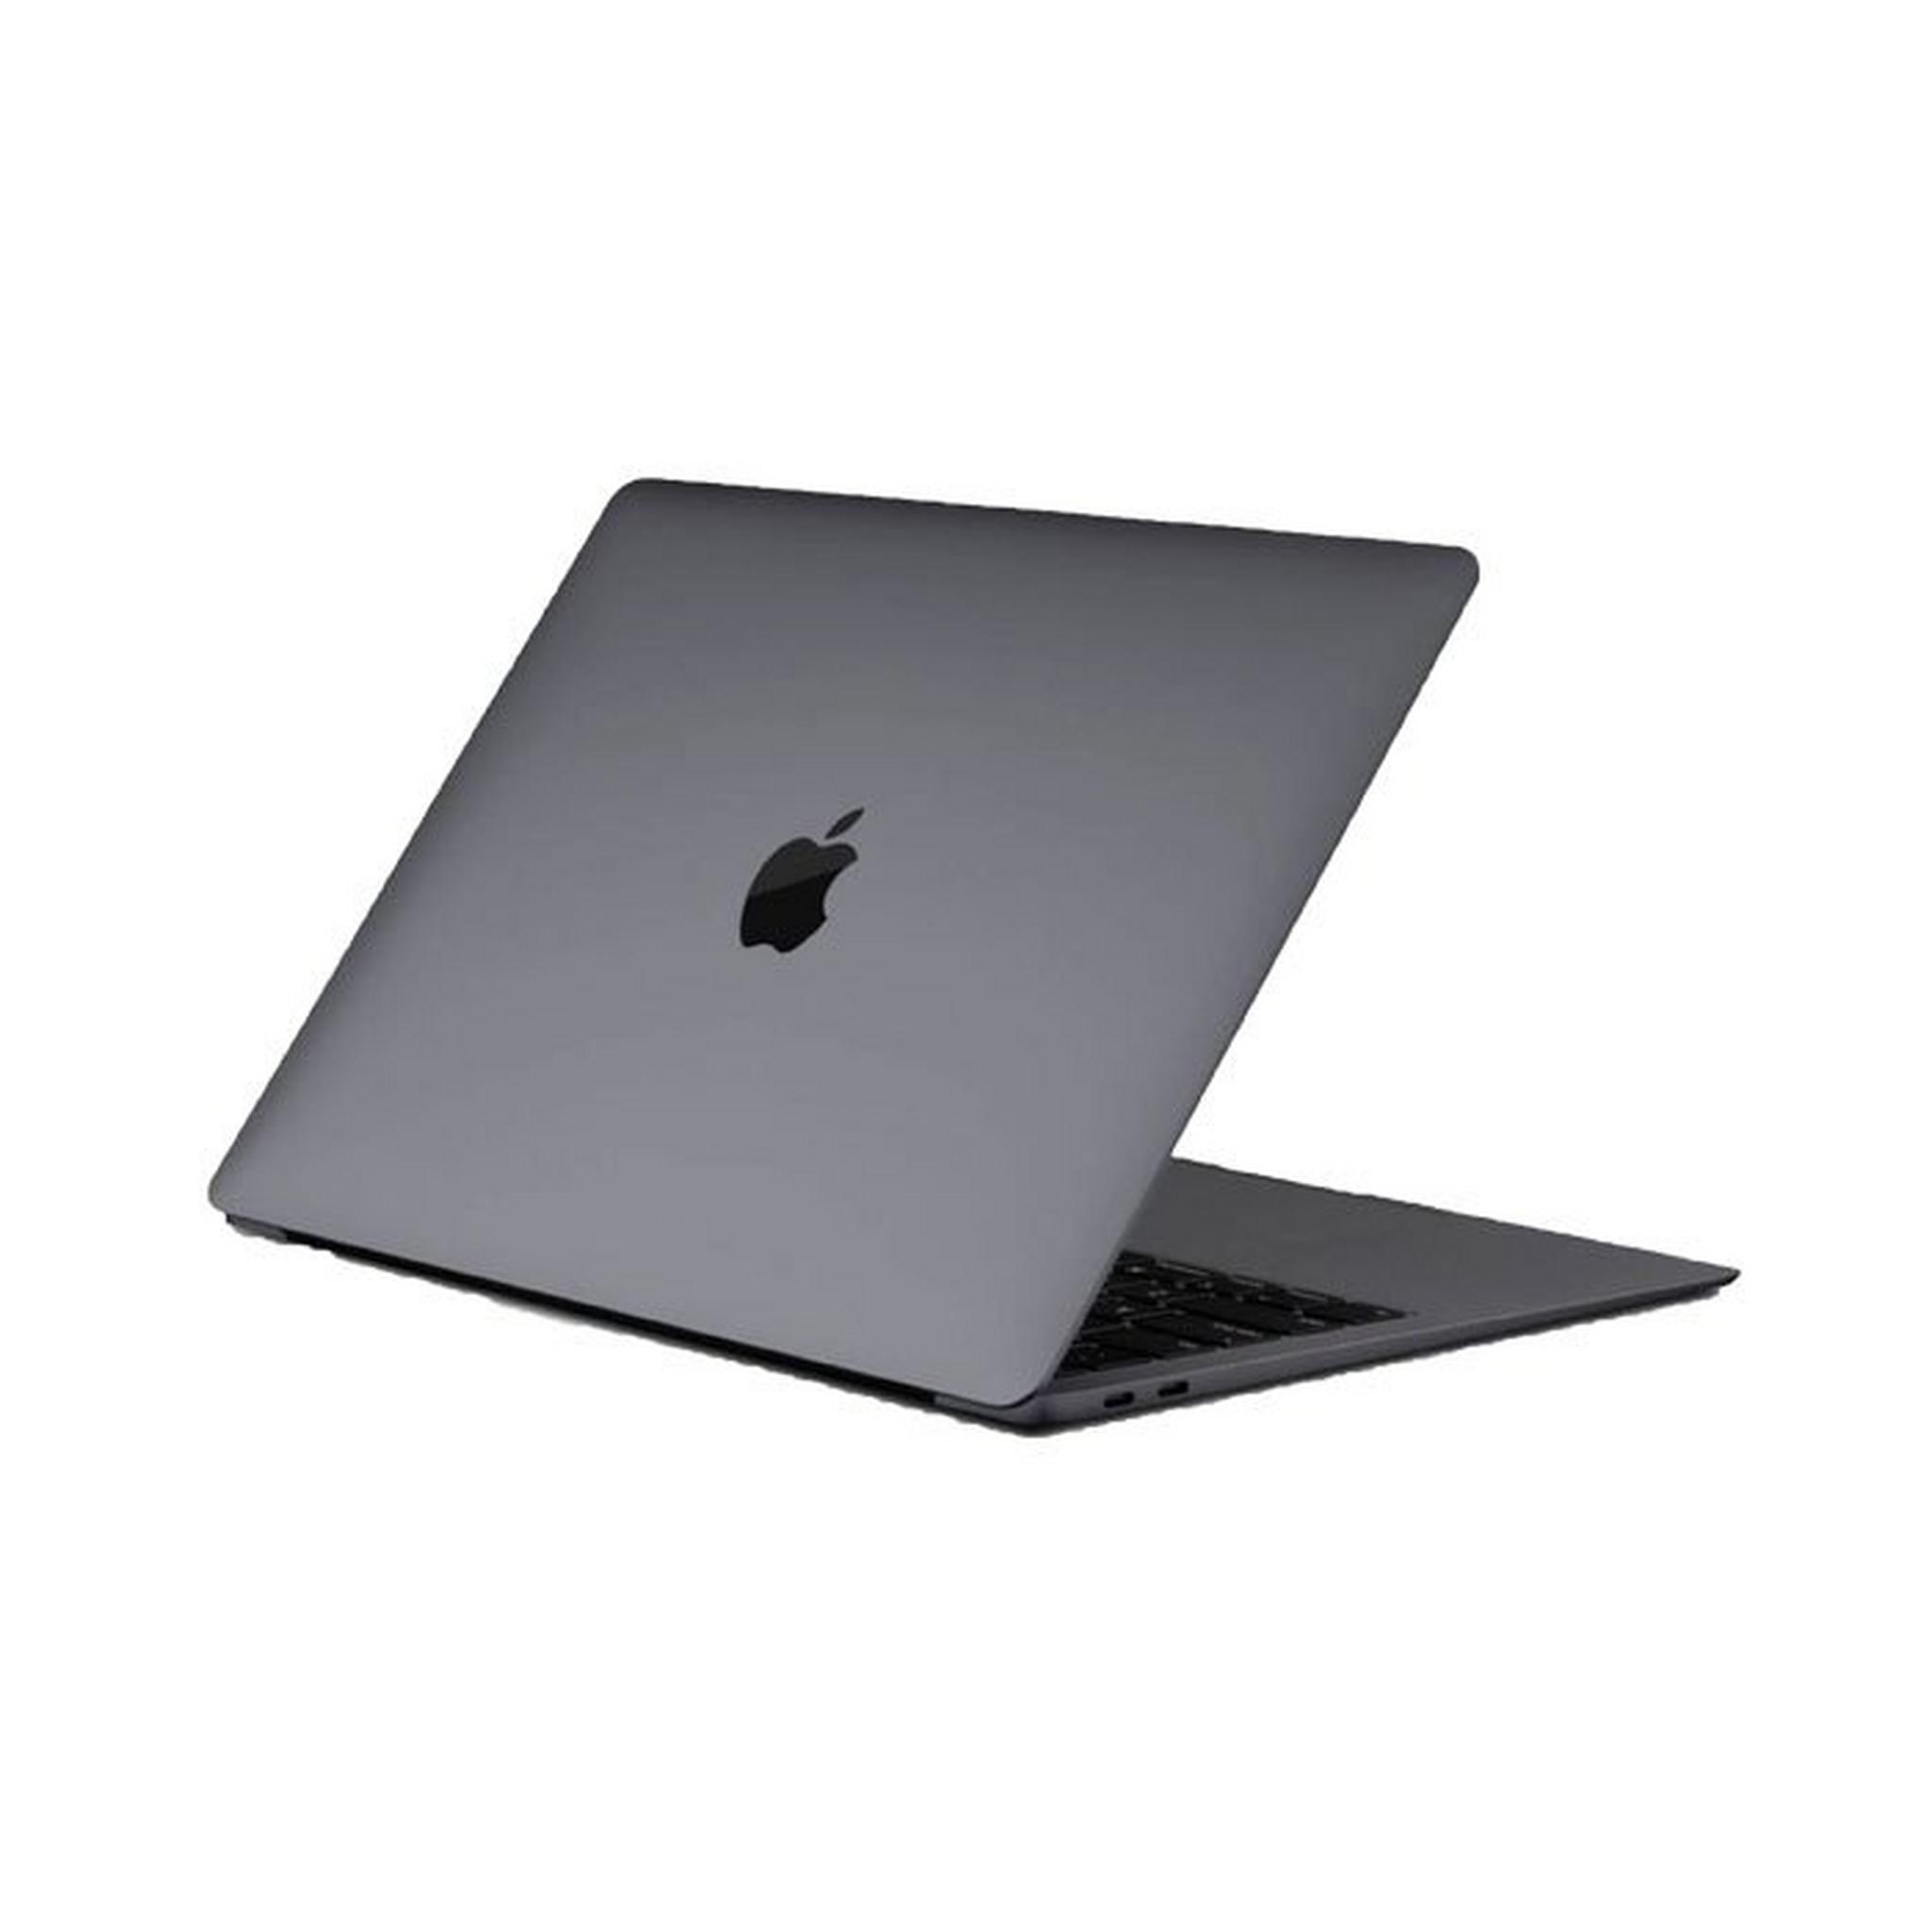 Apple Macbook Air M1 Processor 16GB RAM 256GB SSD 13.3" Laptop - Space Grey